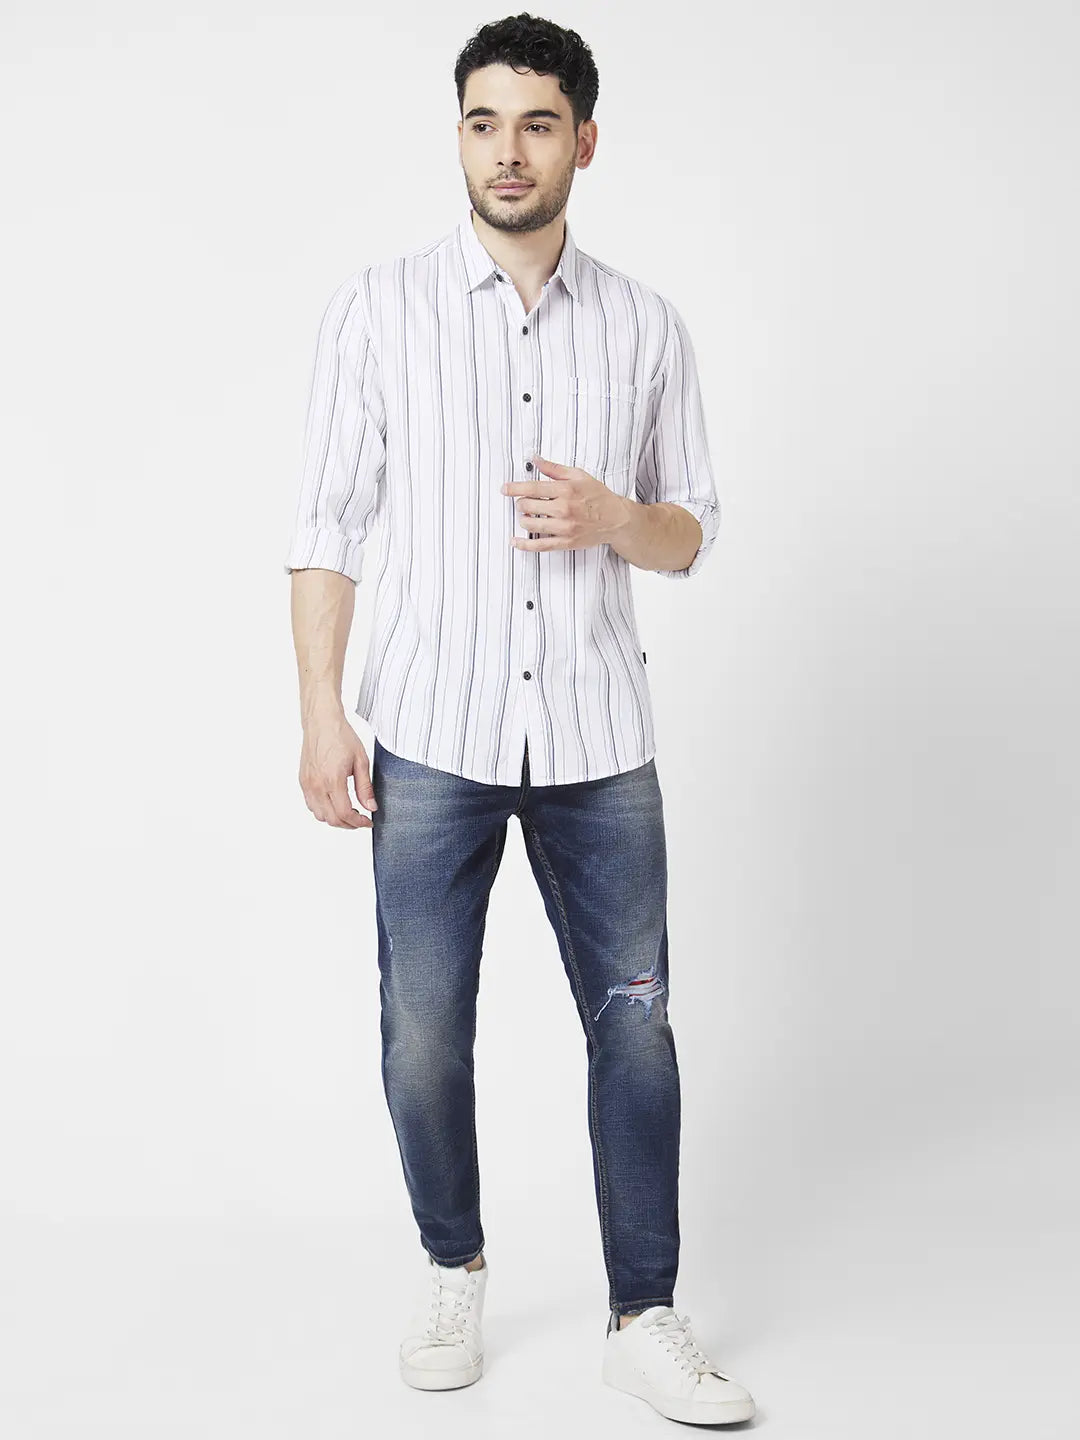 White Jeans Matching Shirt Netherlands, SAVE 52% - nicolebachmann.net